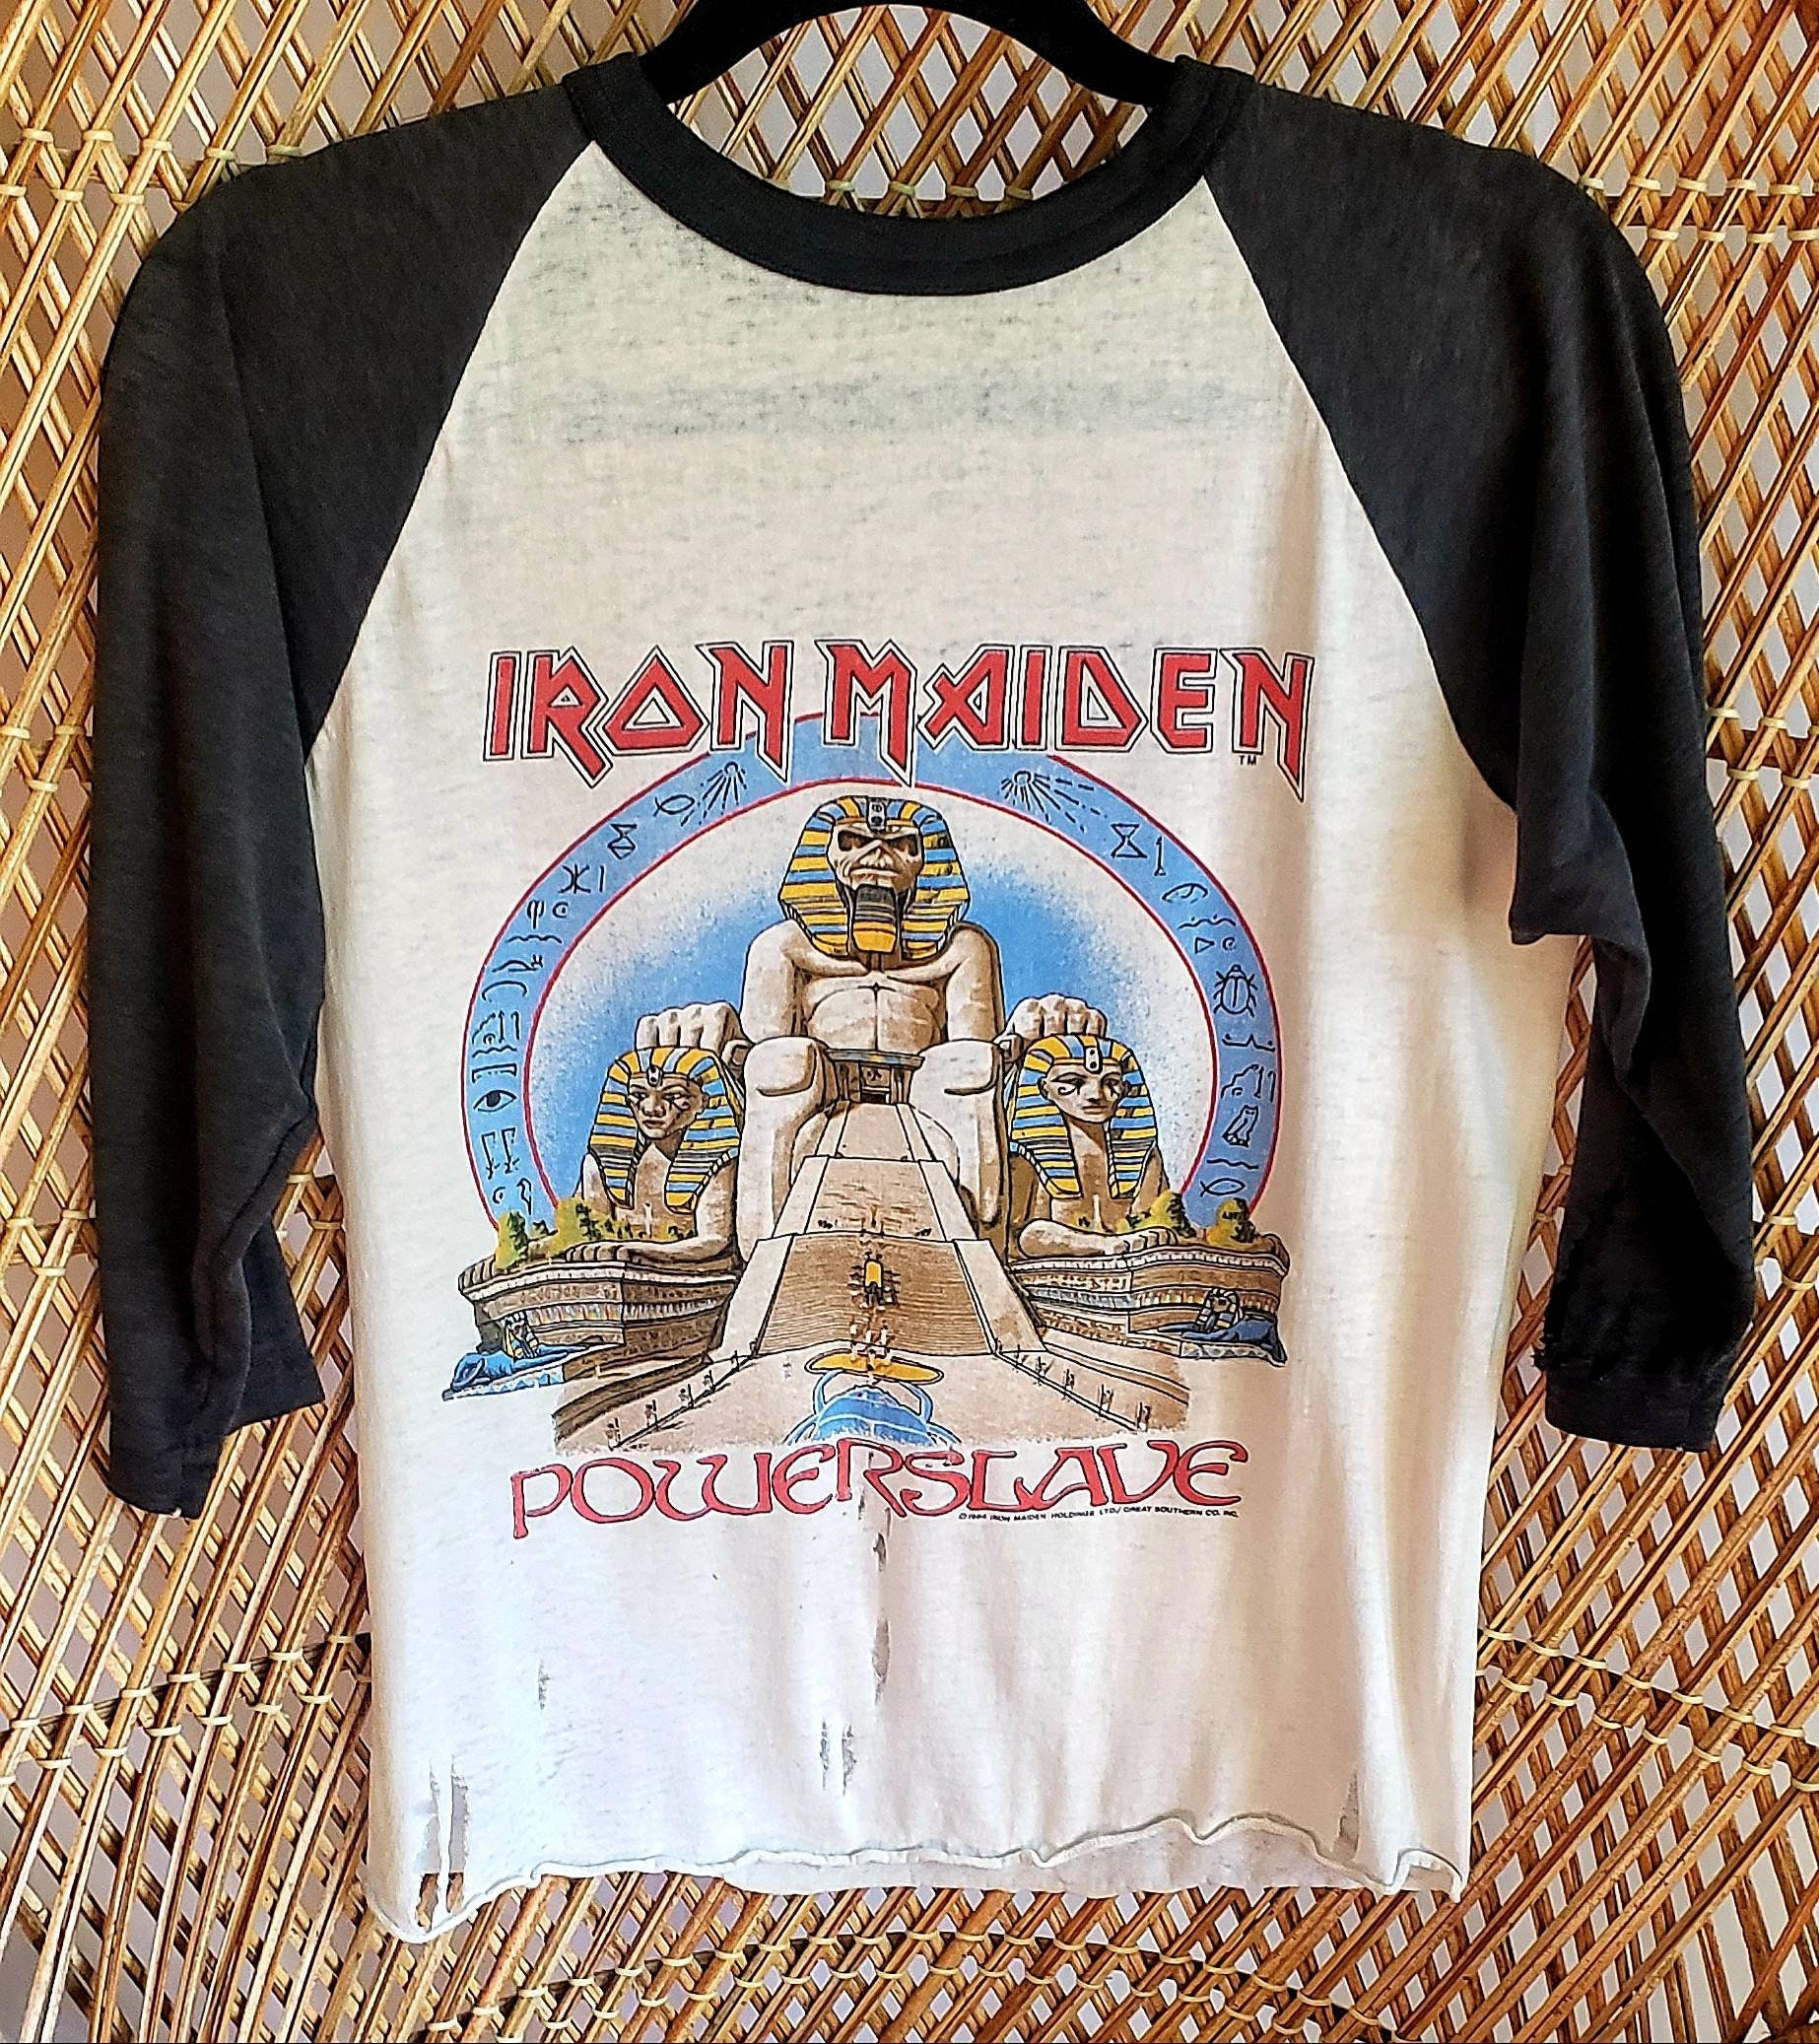 Vintage Iron Maiden Shirt / 84-85 Powerslave Tour / 80s Iron Maiden